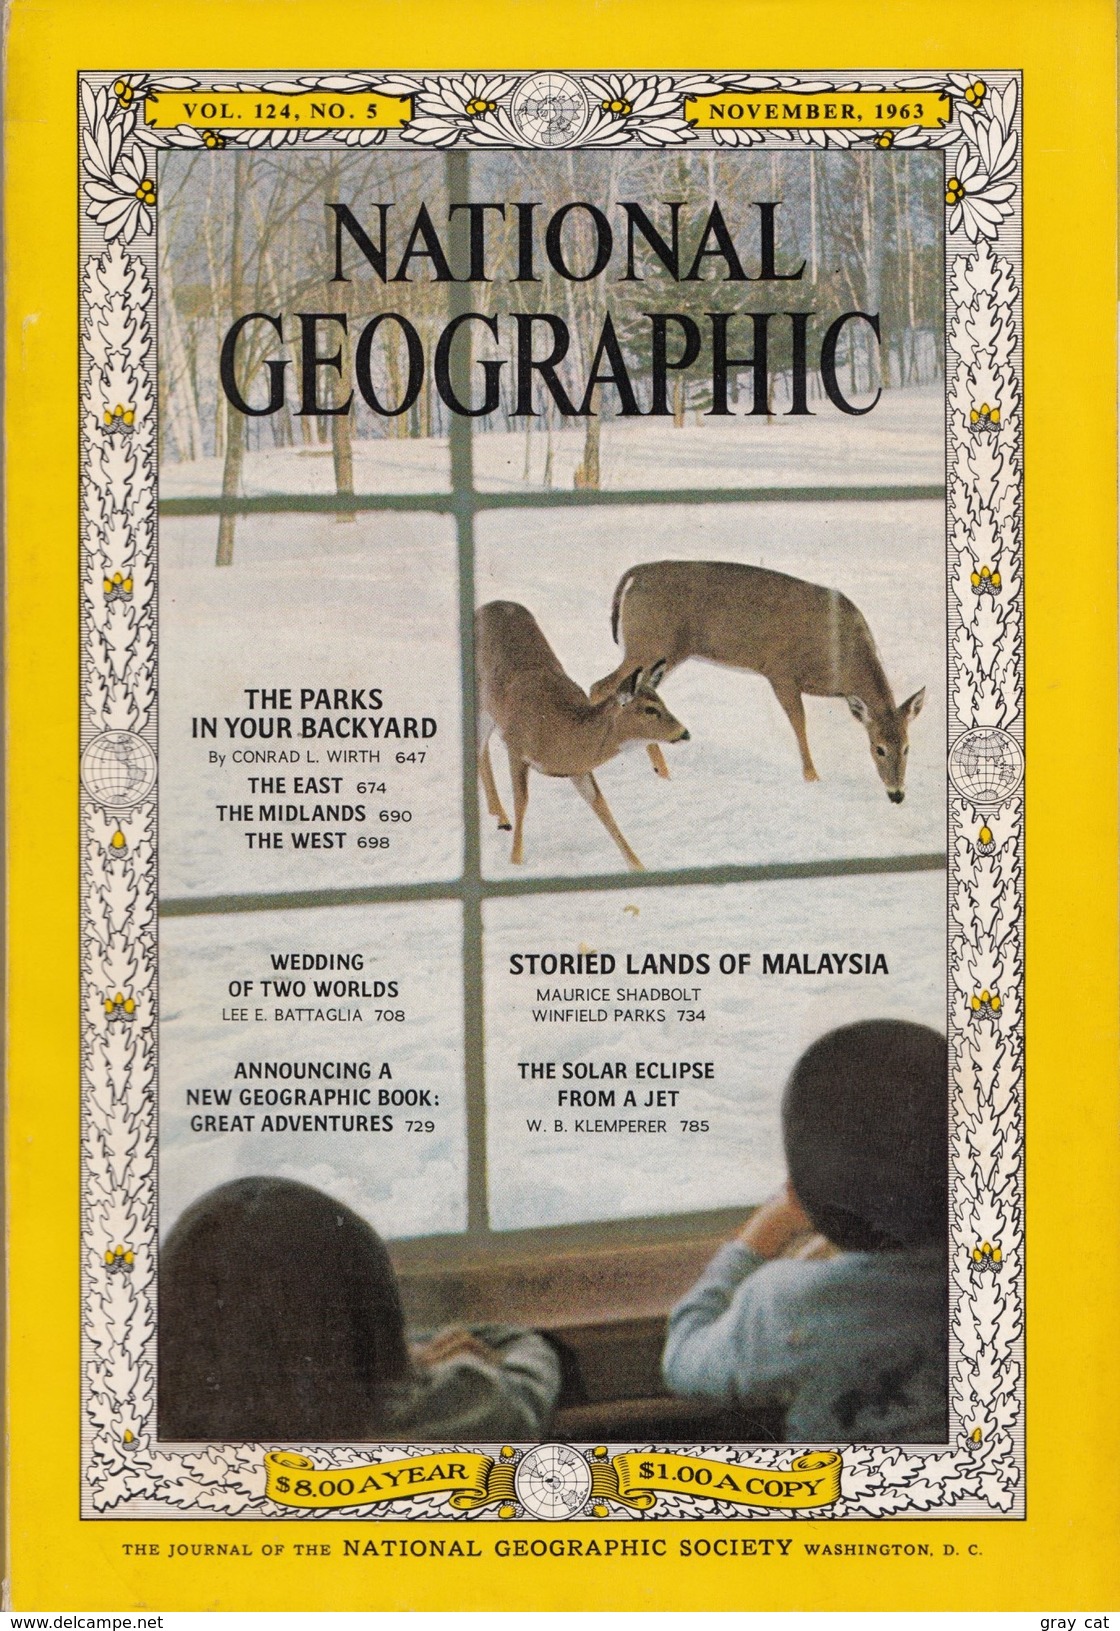 National Geographic Vol. 124, No. 5 November 1963 - Travel/ Exploration